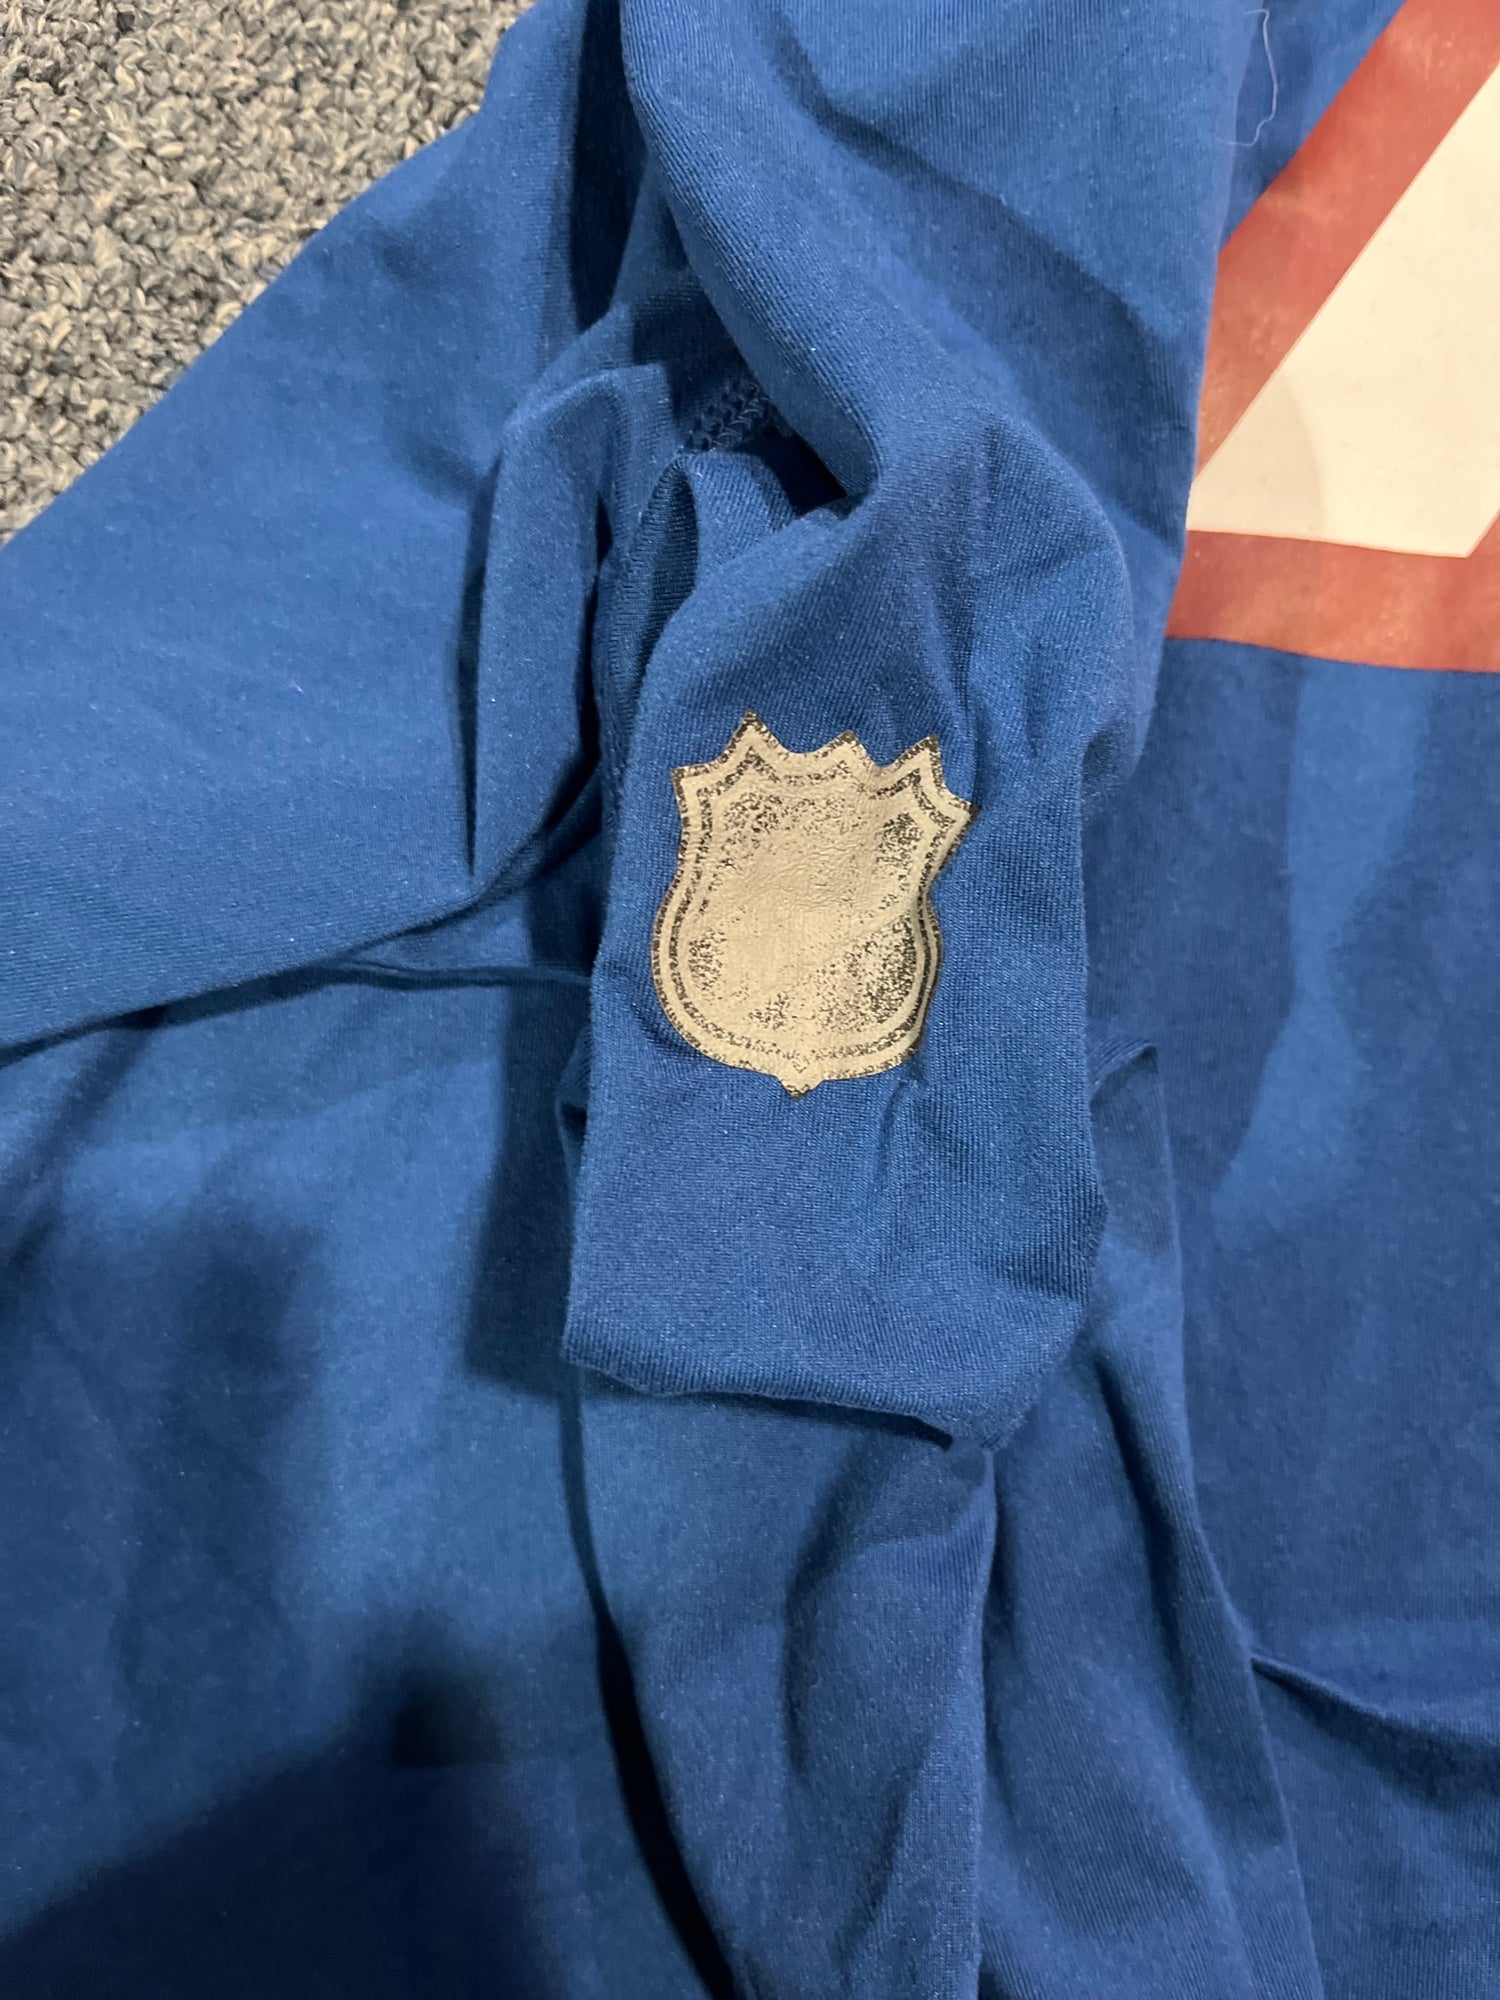 New Blue Fanatics 2020 Colorado Avalanche Stadium Series Long Sleeve Shirt  Small & Large